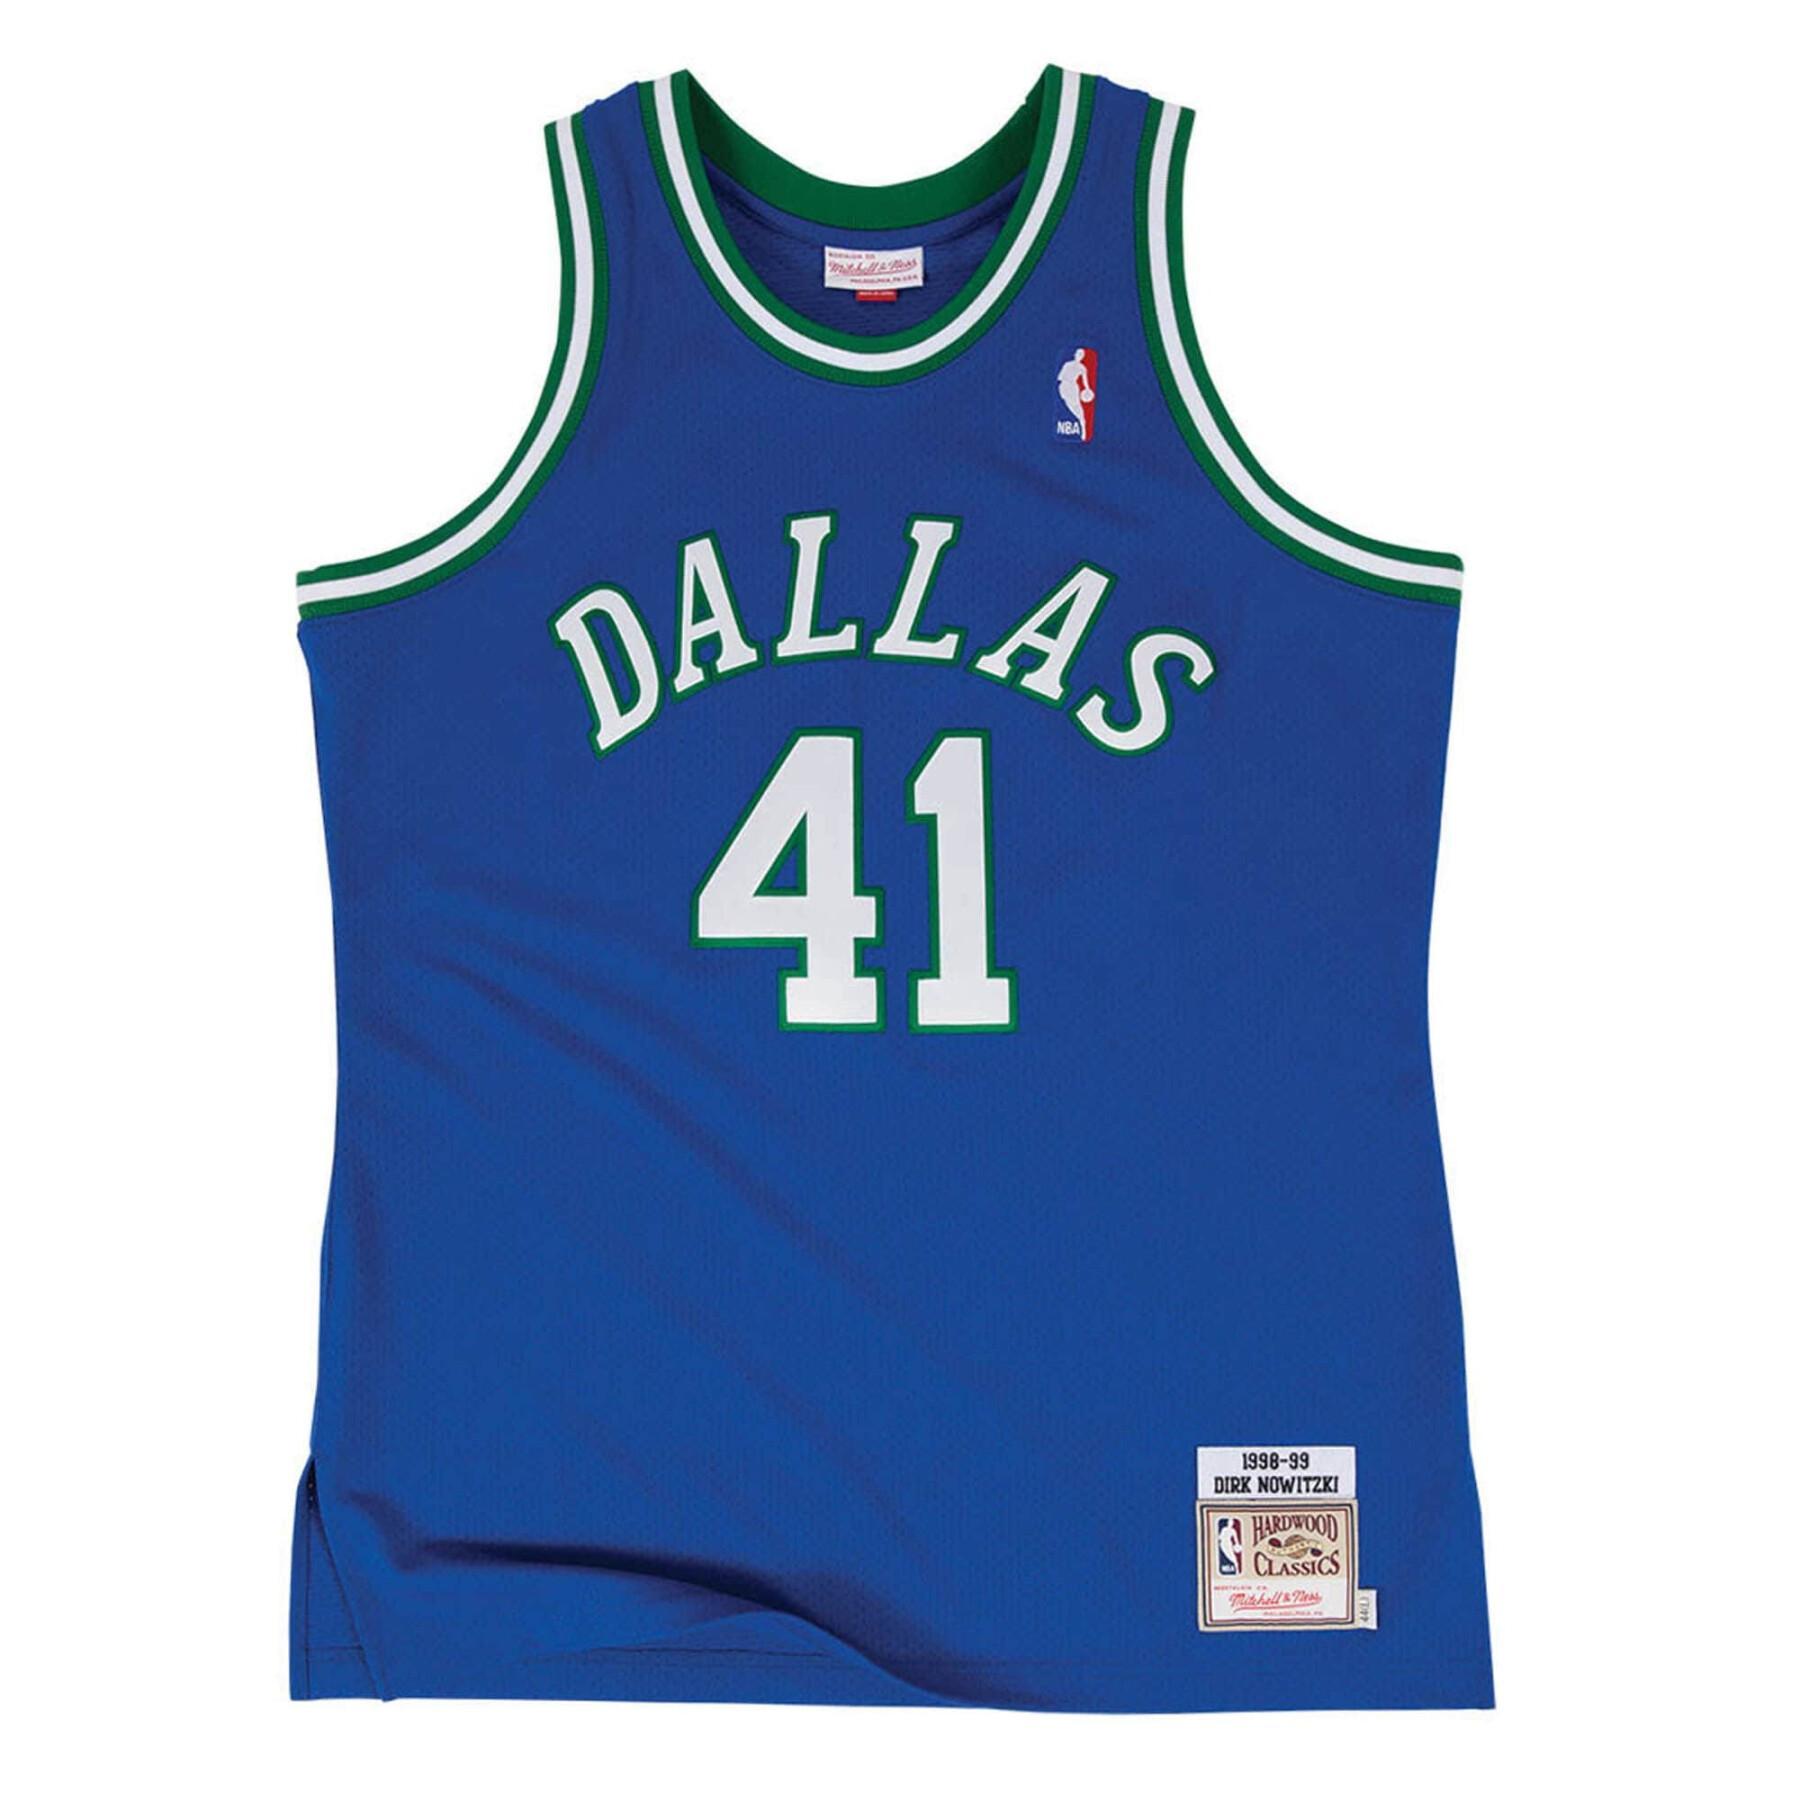 Jersey Dallas Mavericks authentic 1998/99